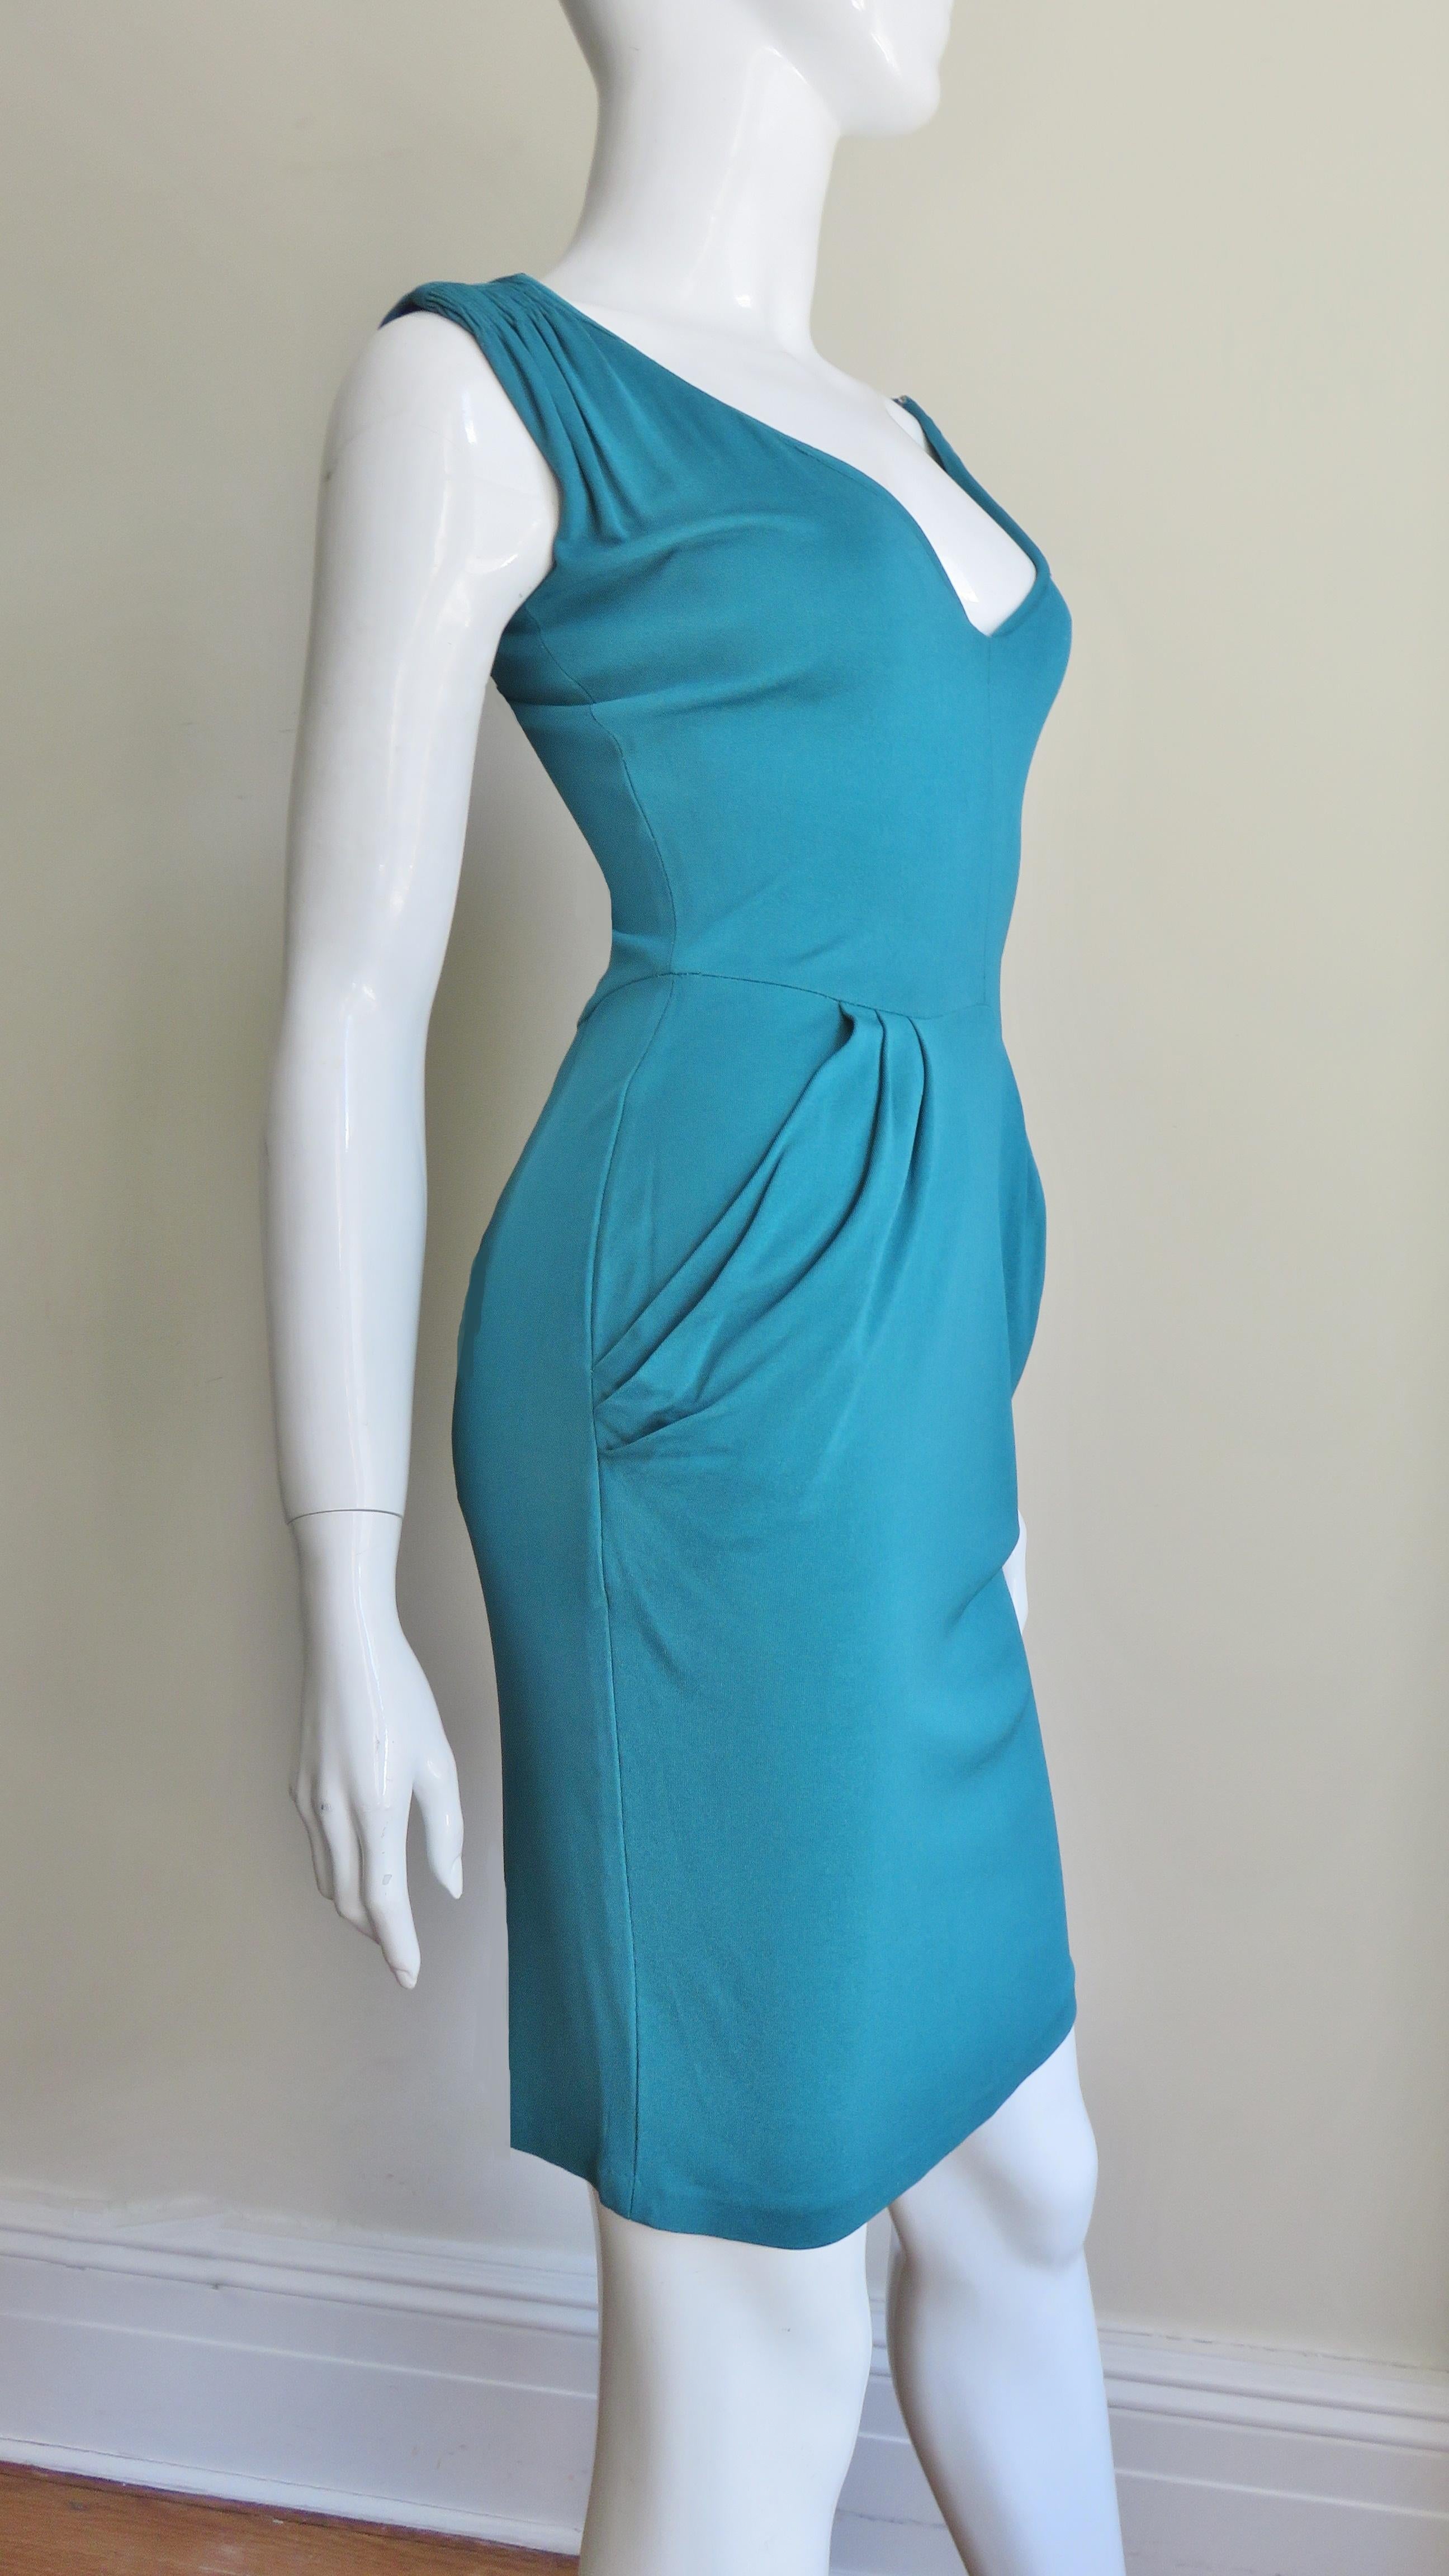  Norma Kamali Omo Dress 1980s For Sale 2